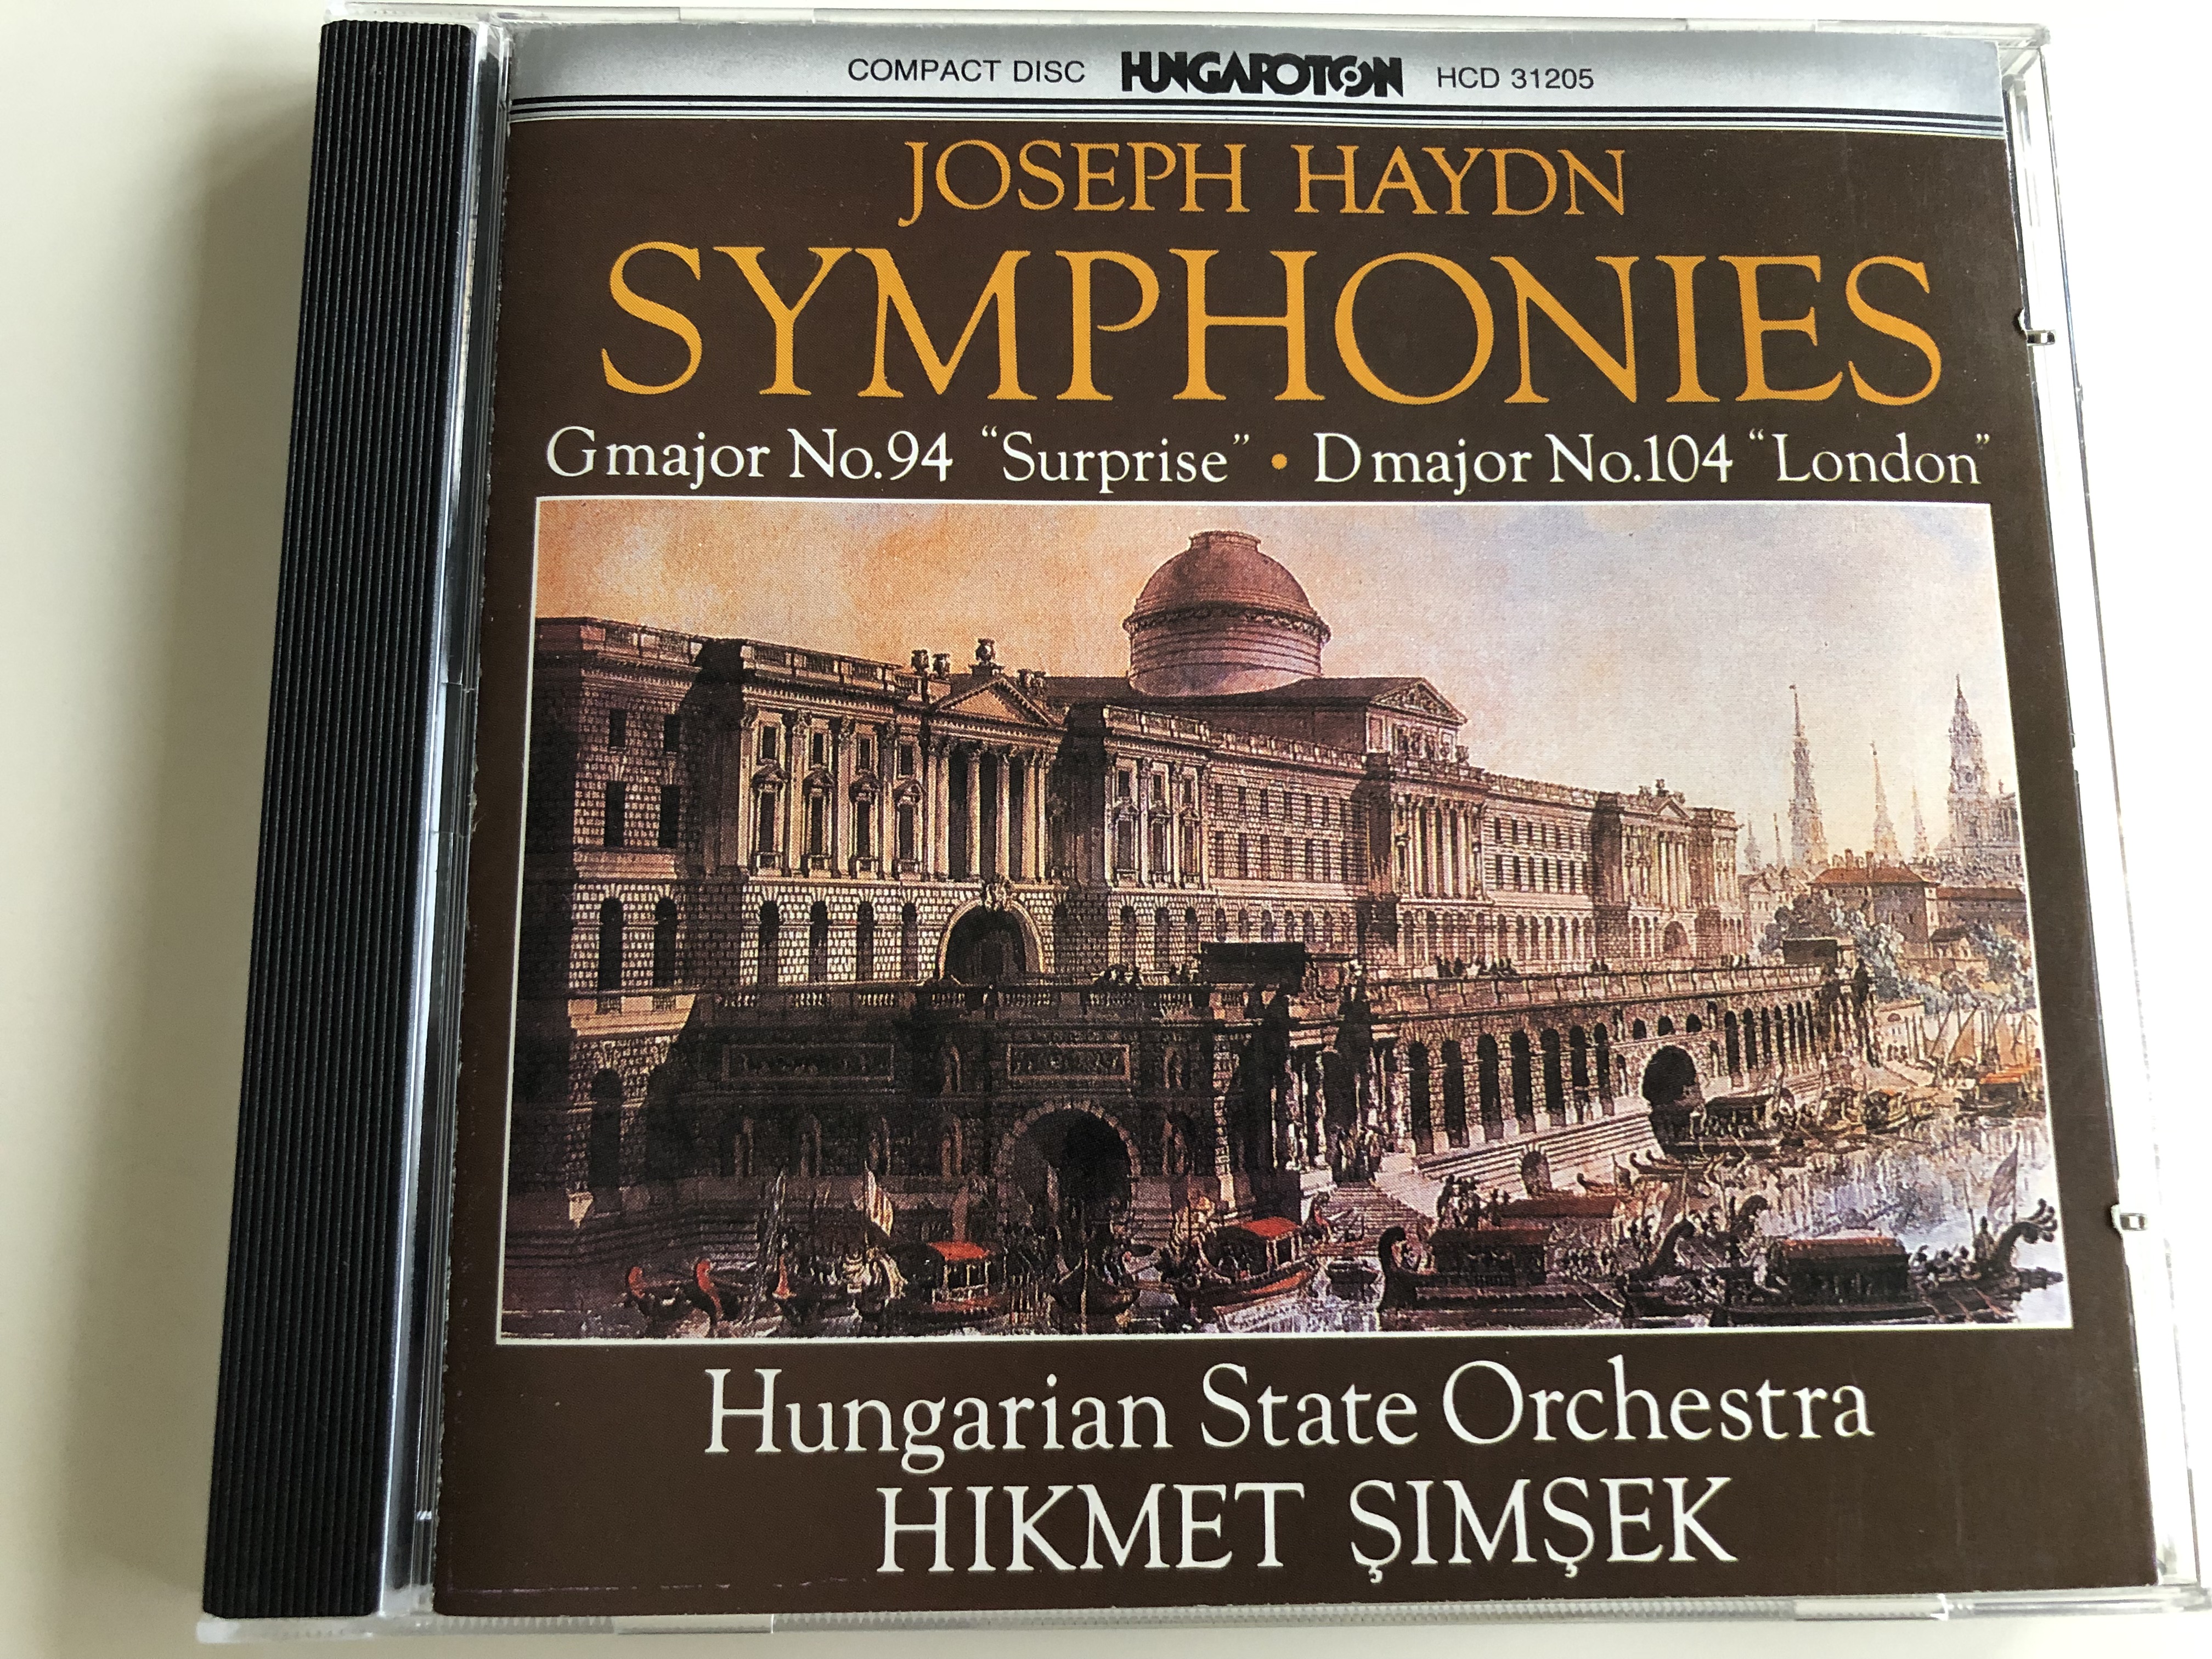 joseph-haydn-symphonies-g-major-no.94-surprise-d-major-no.-104-london-hungarian-state-orchestra-conducted-by-hikmet-simsek-hungaroton-hcd-31205-1-.jpg